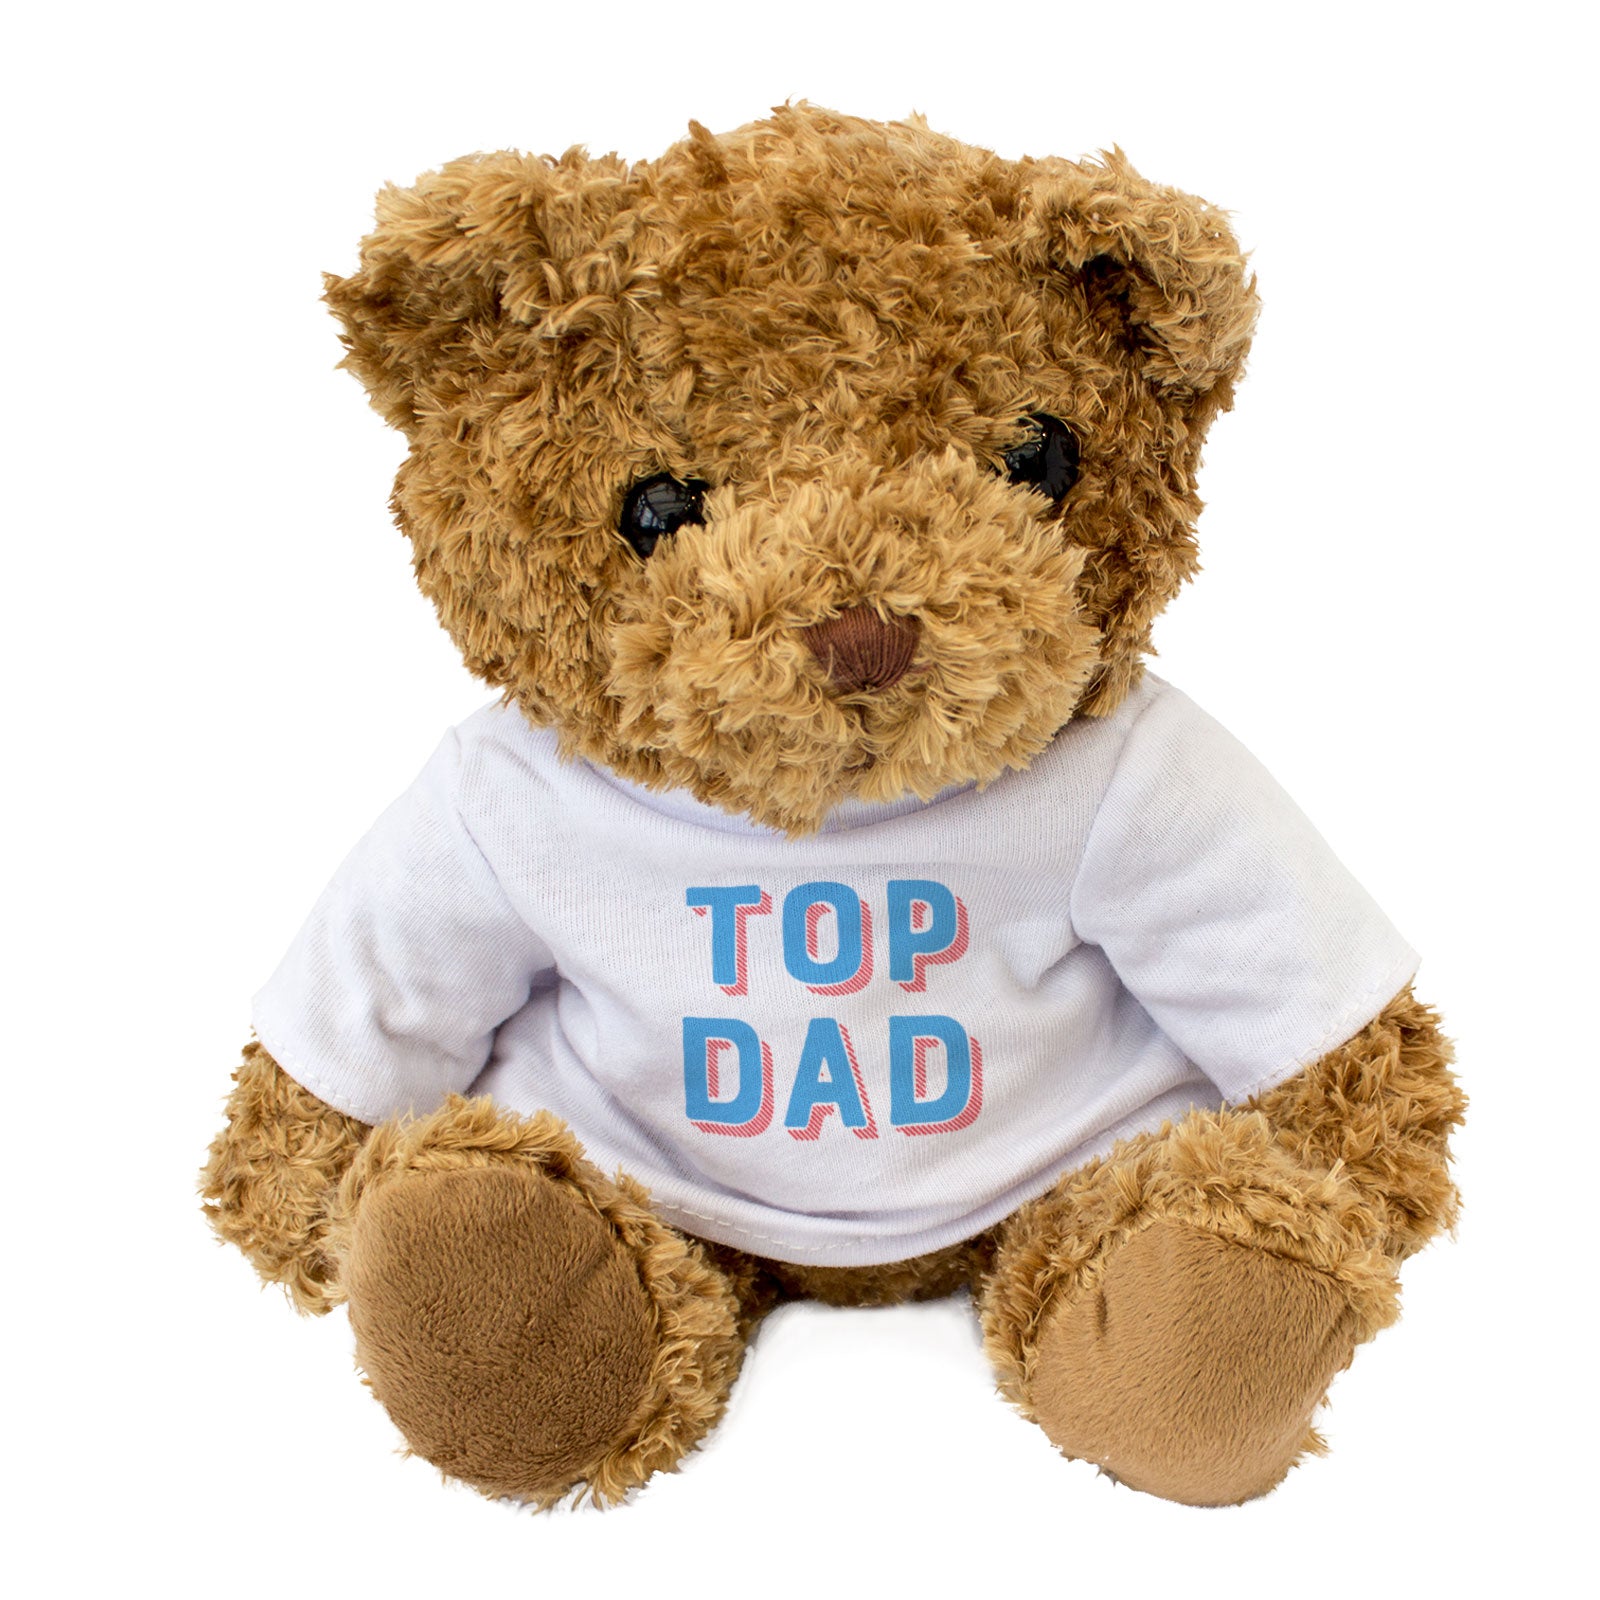 Top Dad - Teddy Bear